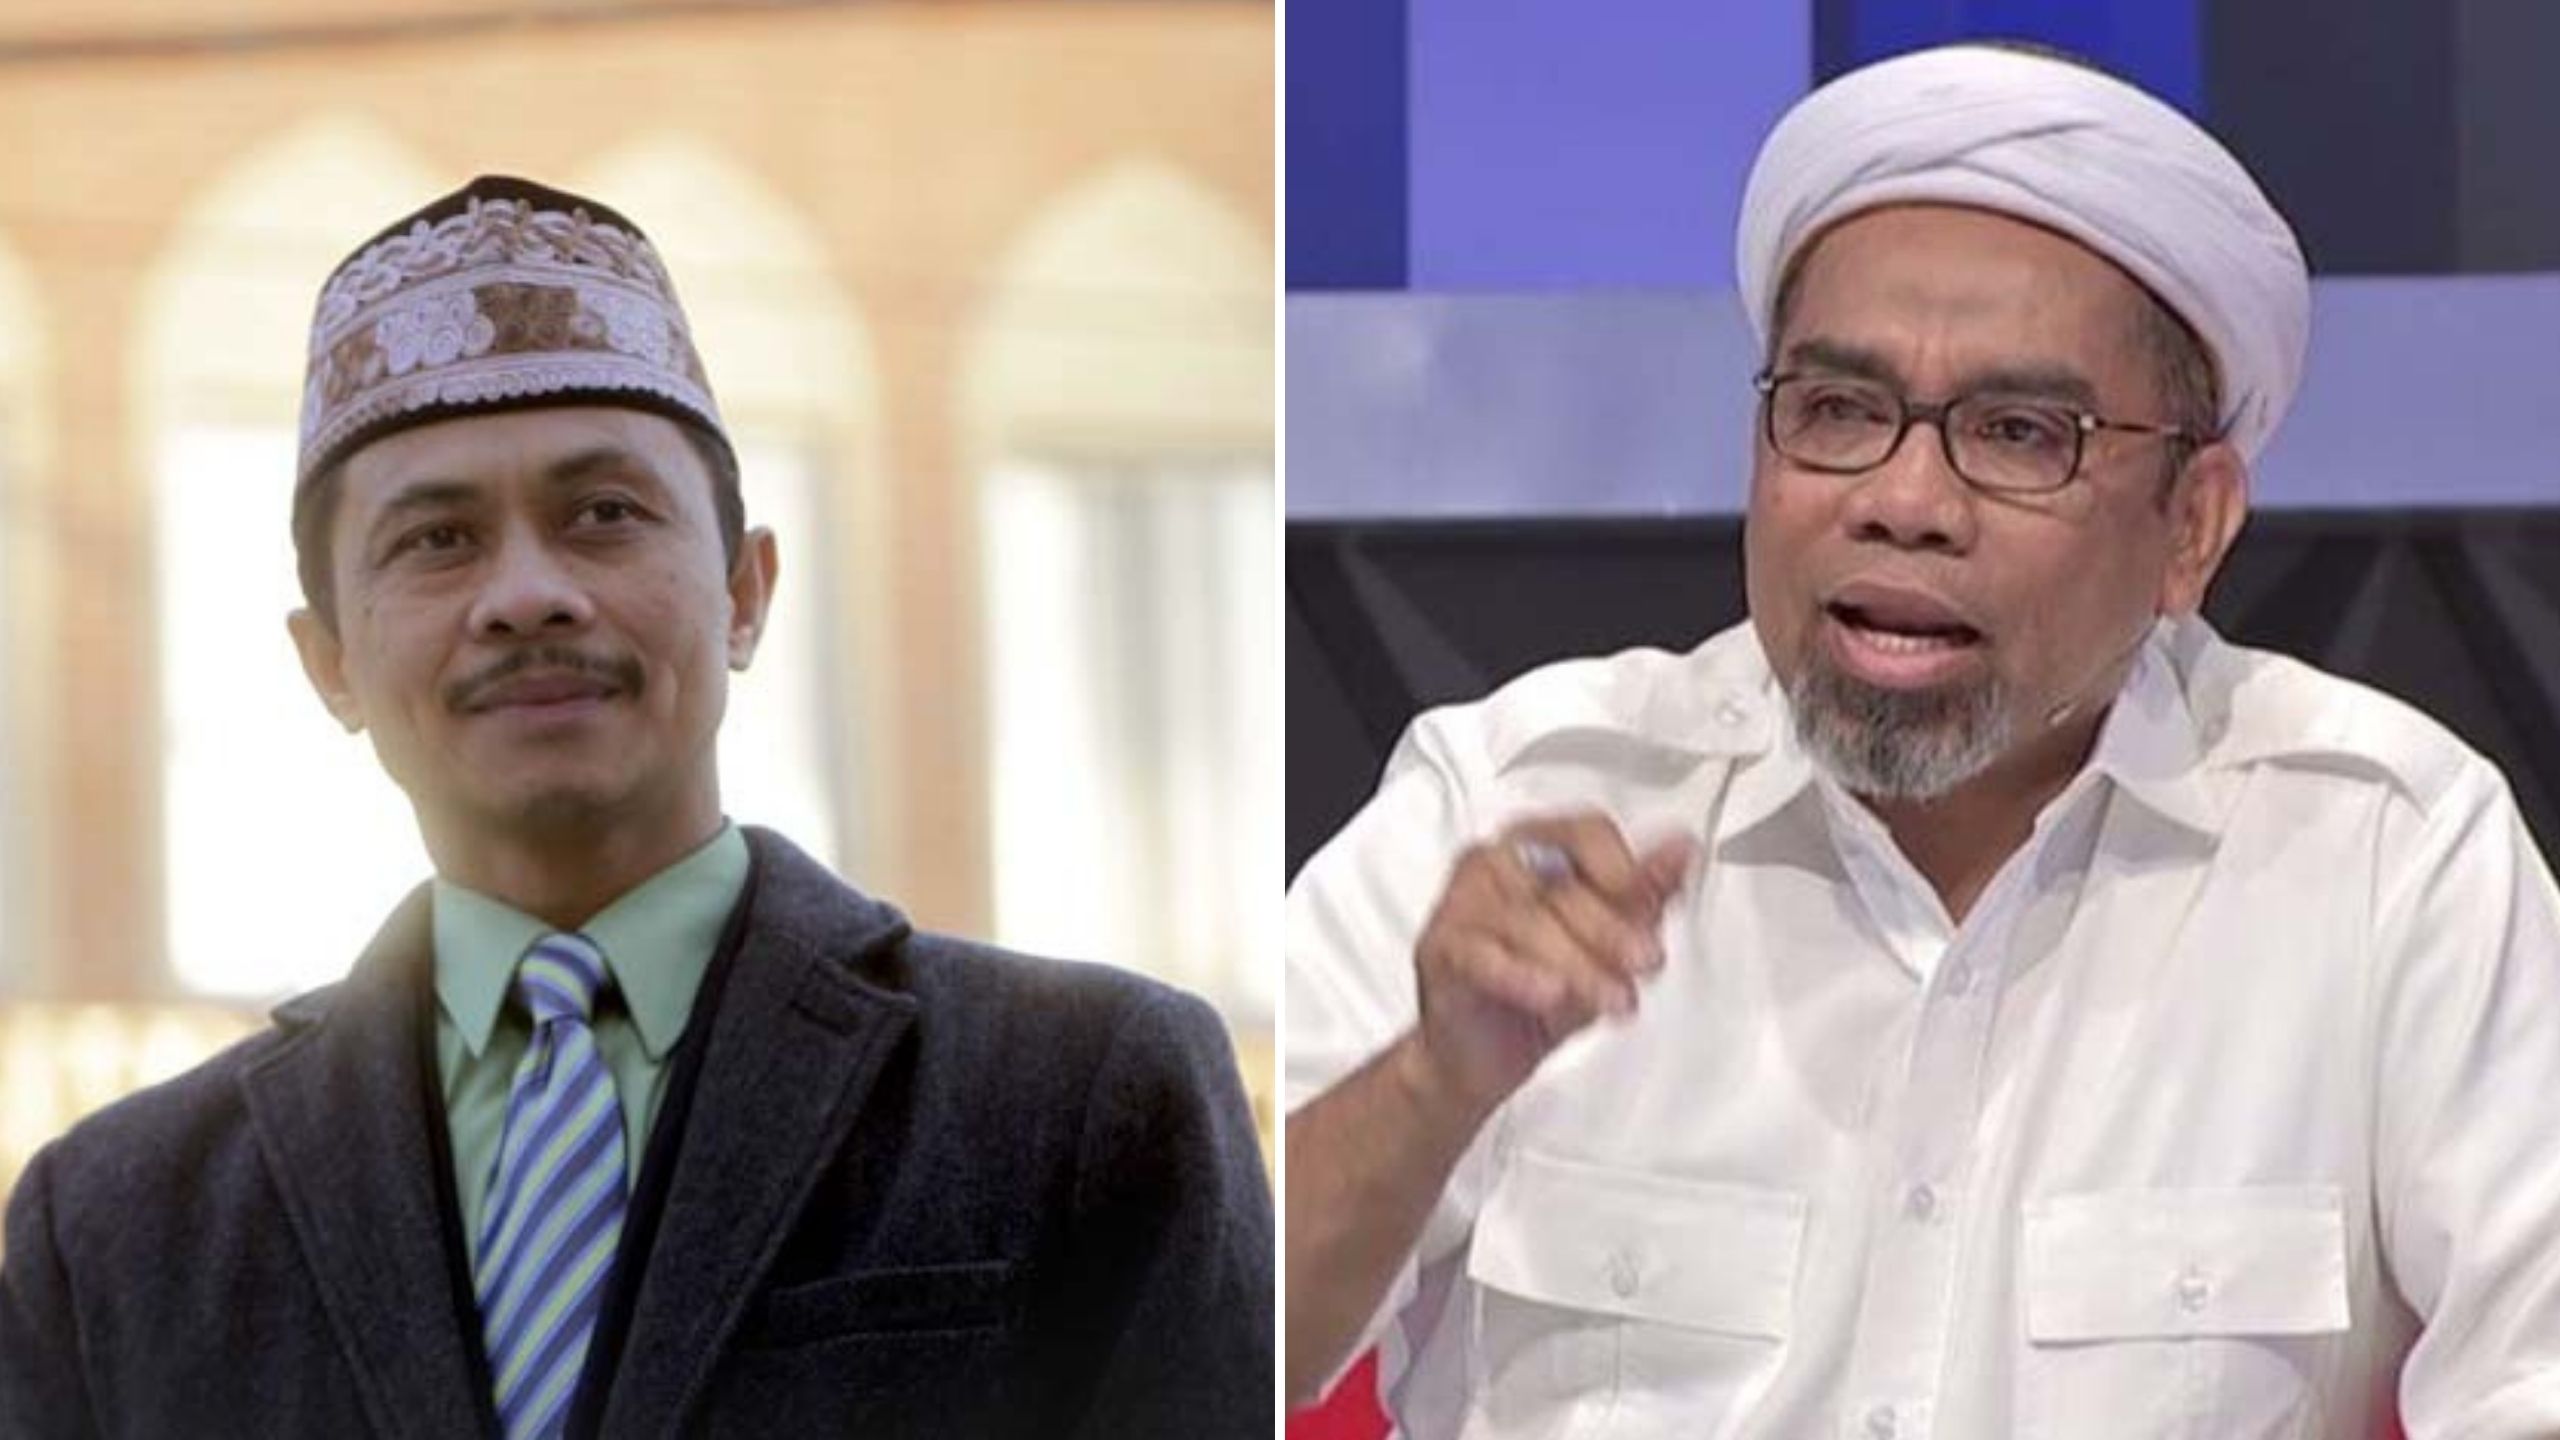 Waduh! Ngabalin Ngamuk ke Imam Shamsi Sampai Bawa-bawa Akhlak: Manusia Berotak Sungsang!